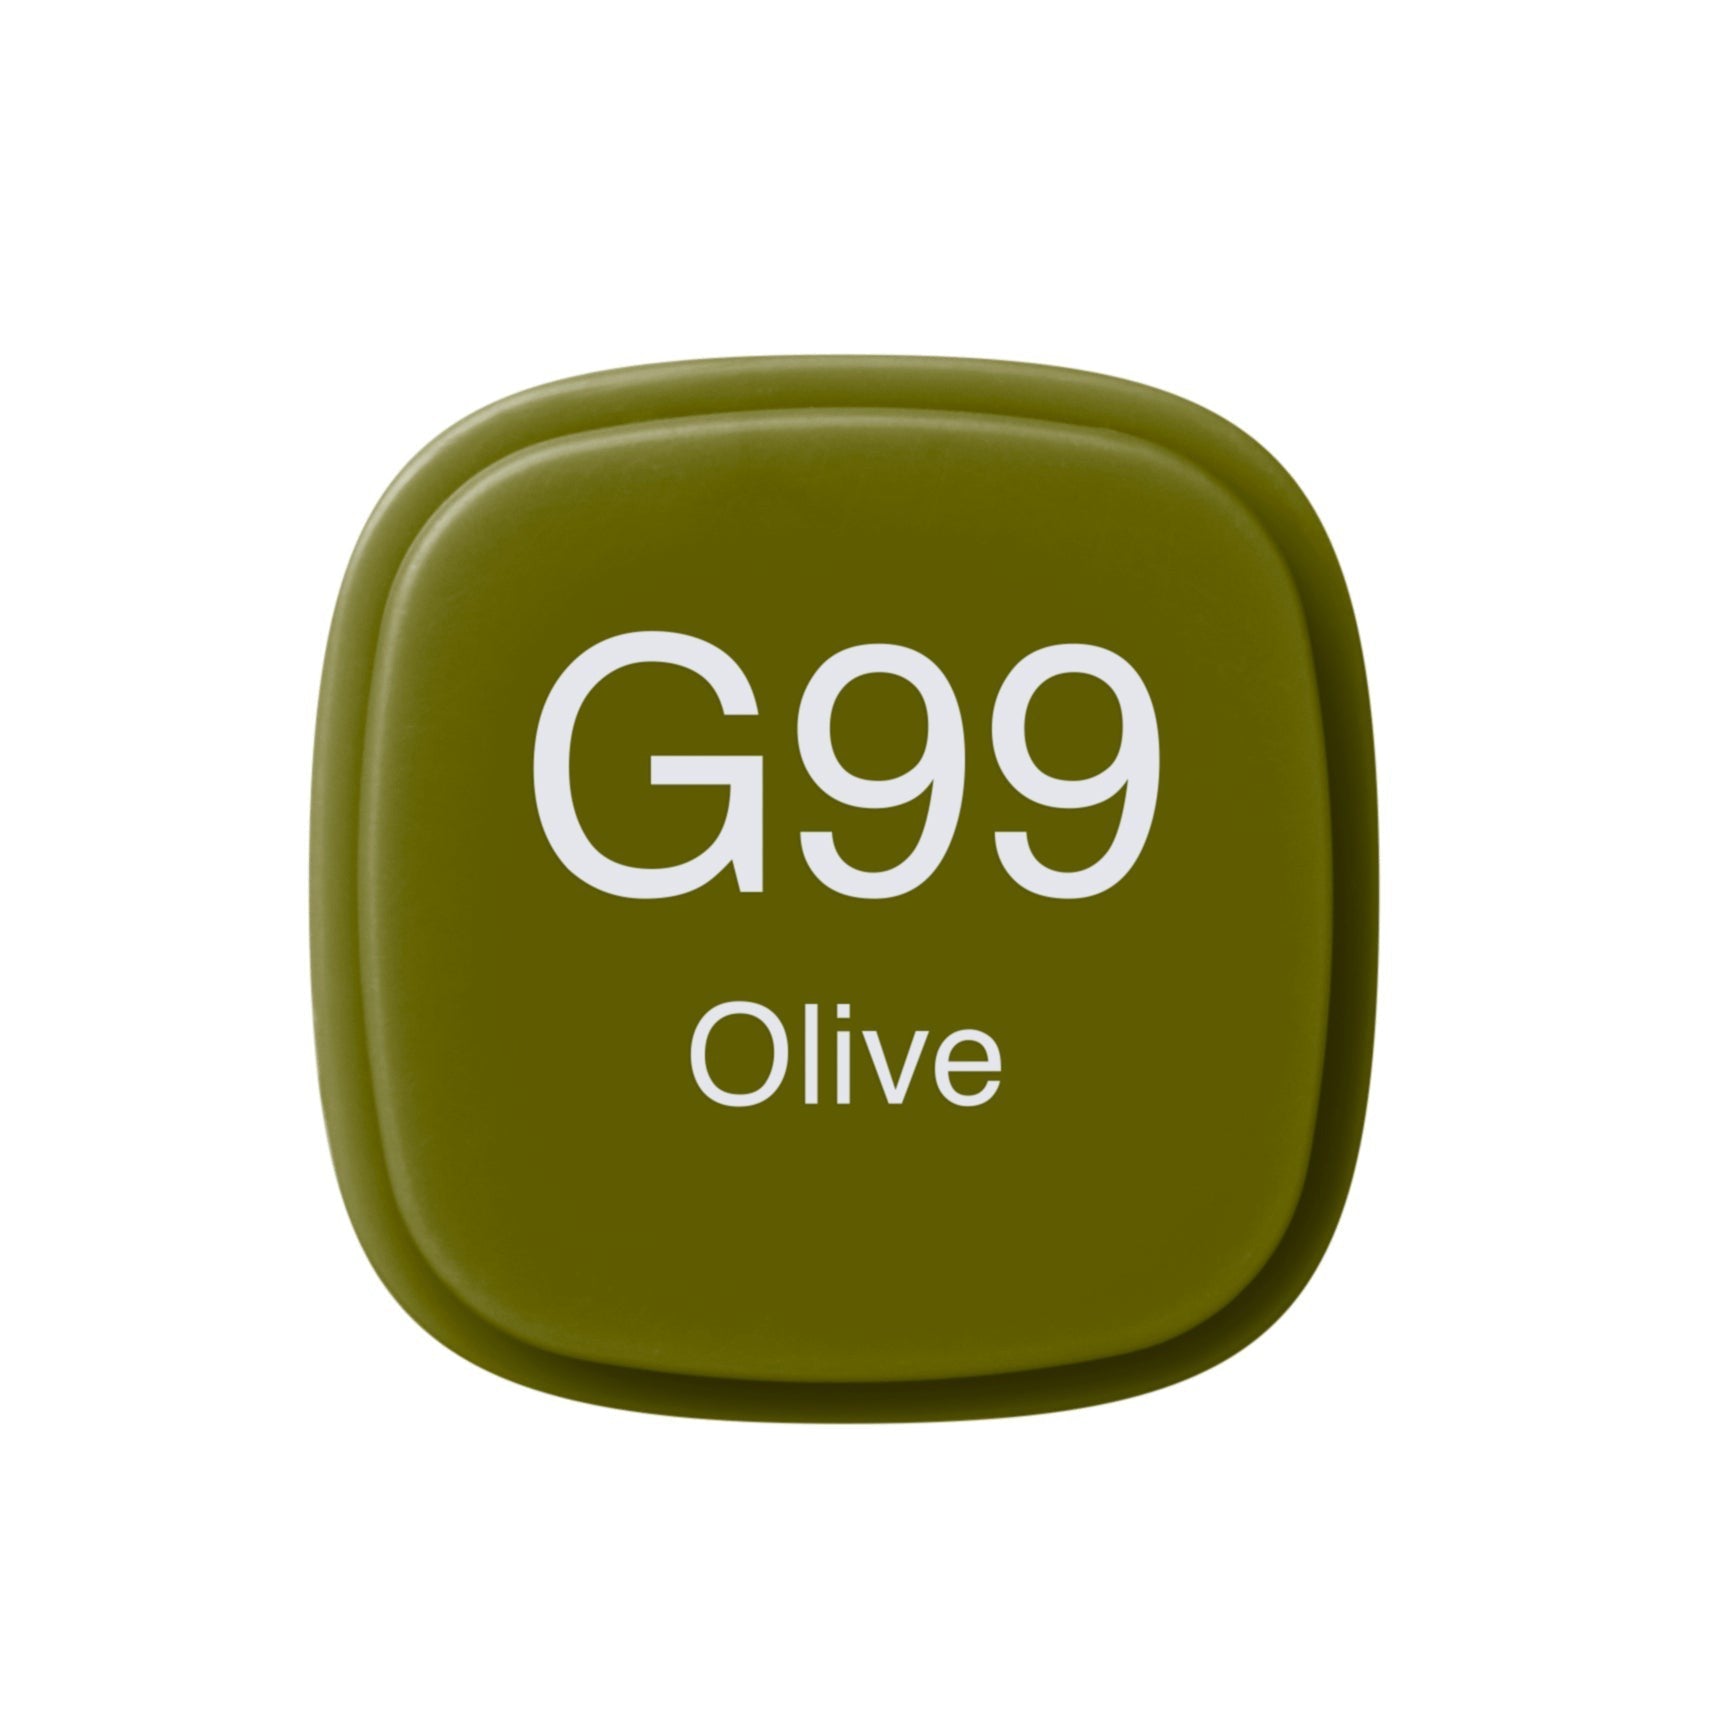 Copic - Original Marker - Olive - G99-ScrapbookPal